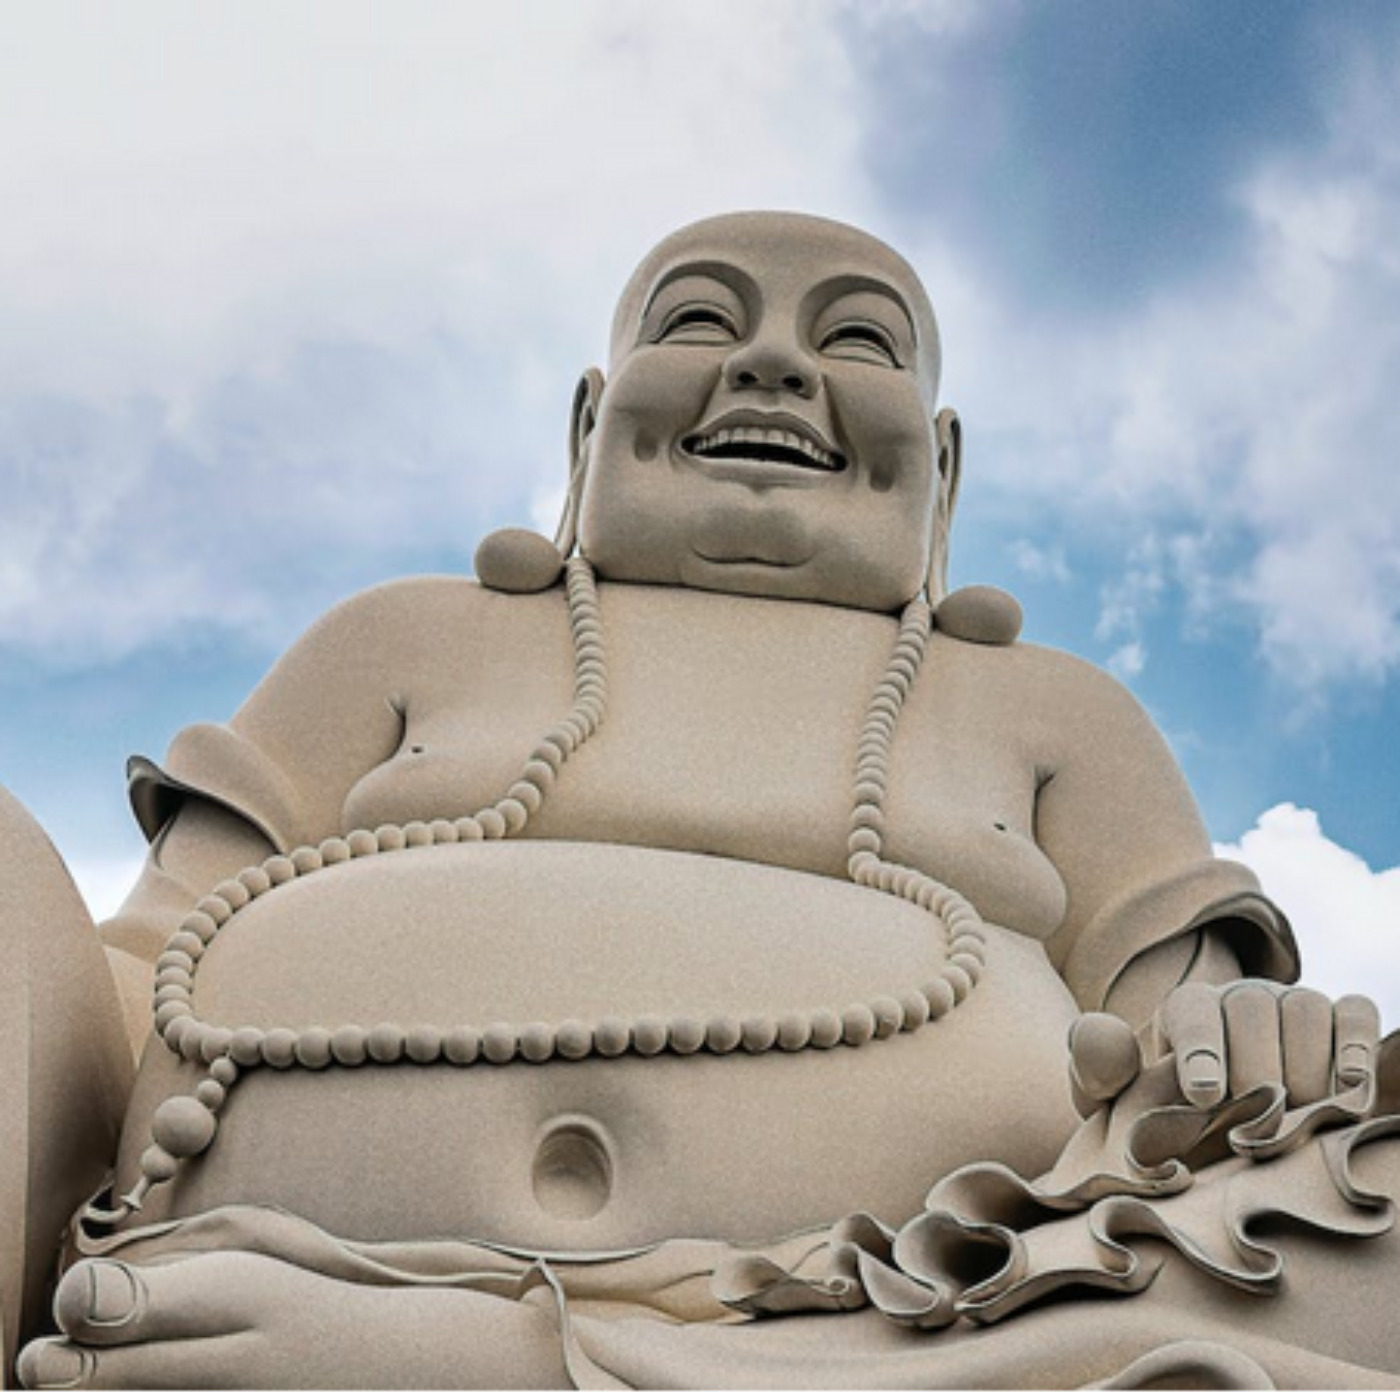 Buddhism and the Cosmic Joke